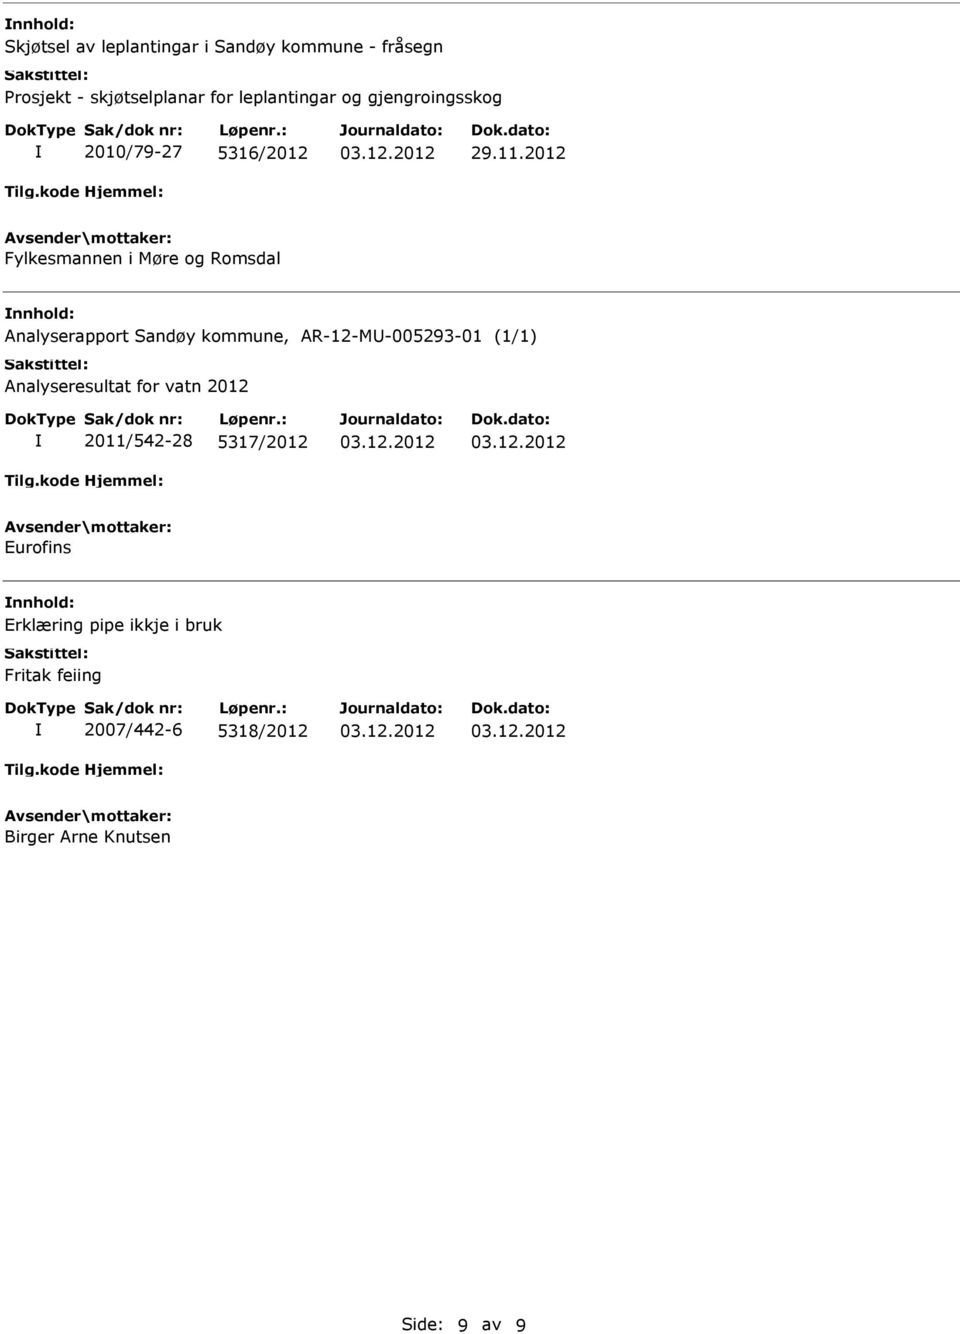 kommune, AR-12-M-005293-01 (1/1) Analyseresultat for vatn 2012 2011/542-28 5317/2012 Eurofins